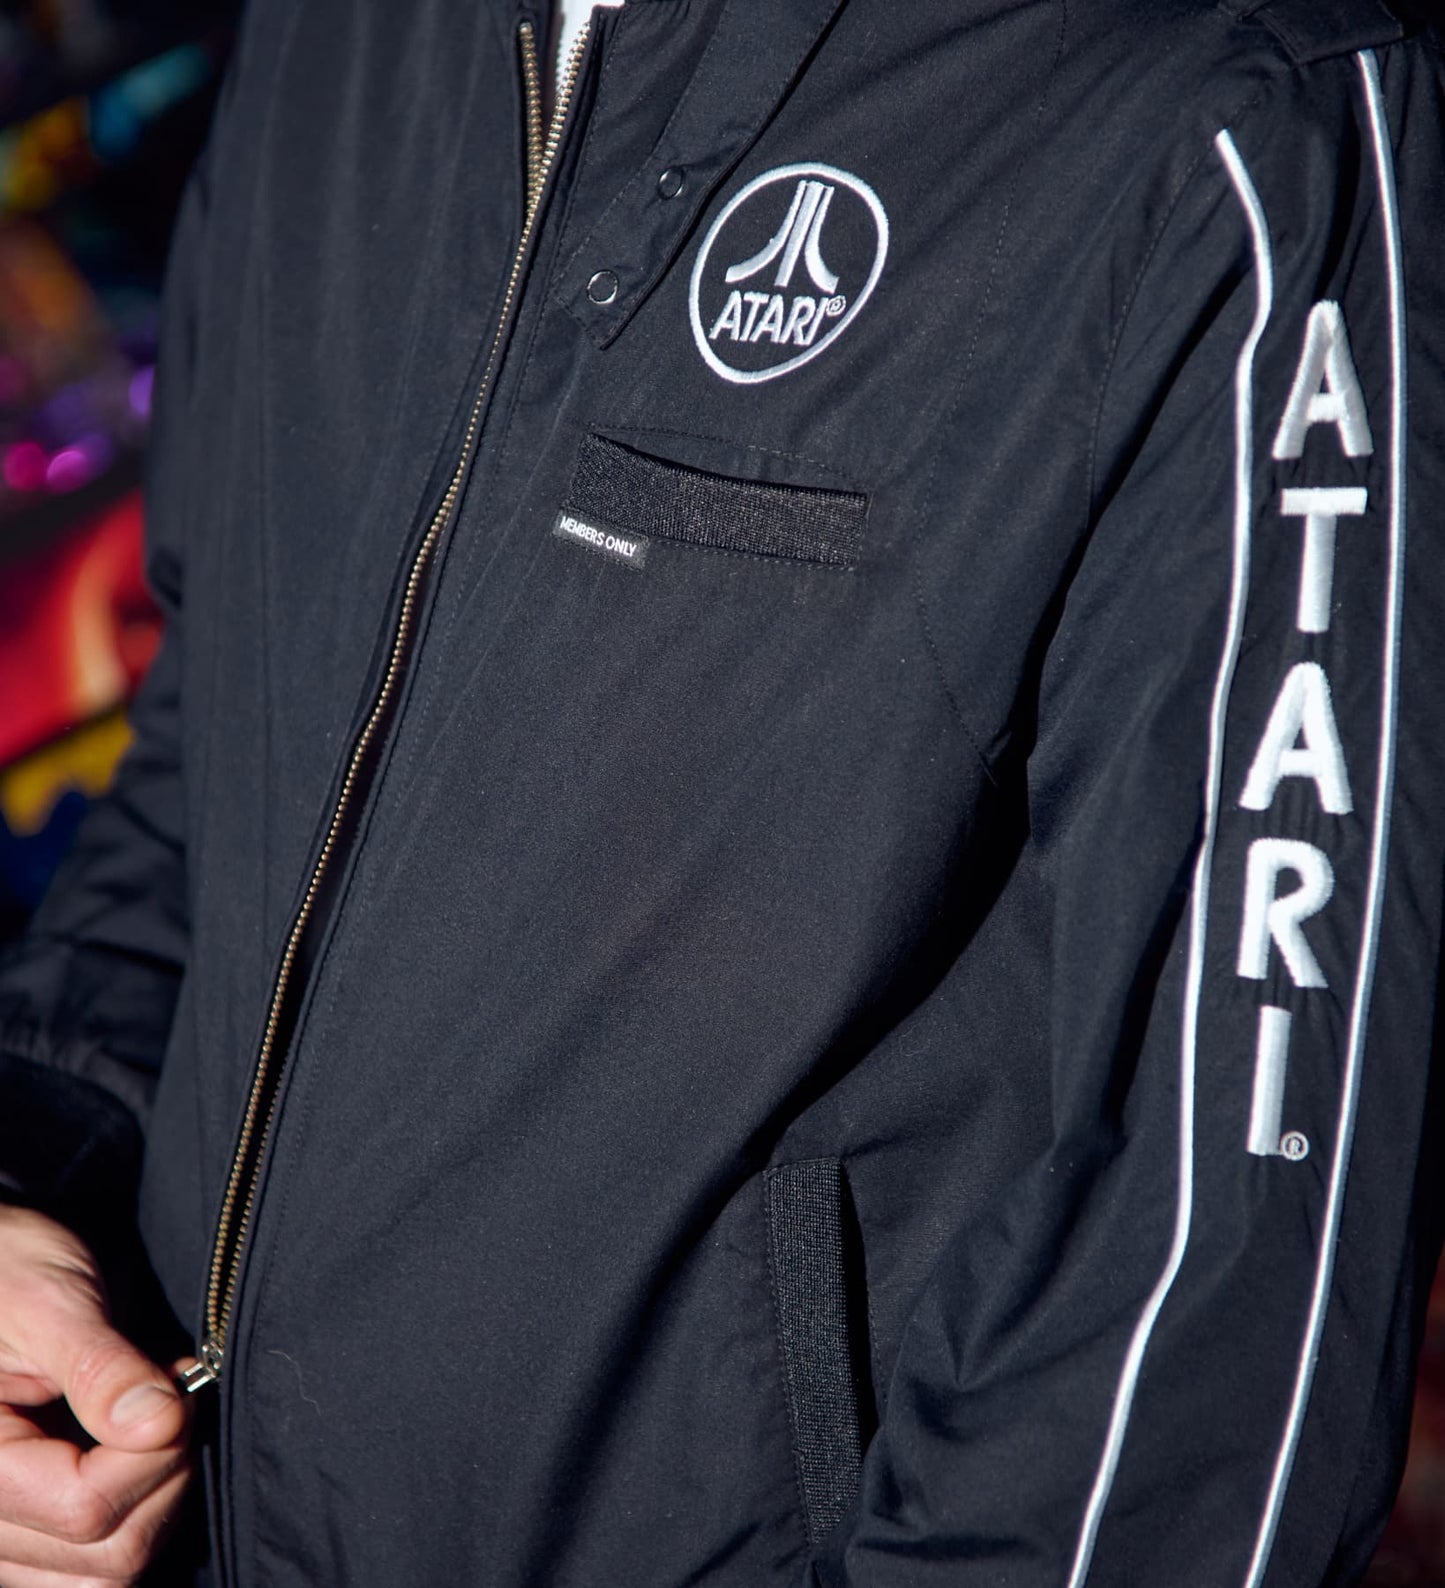 Atari Club Members Jacket (Black)